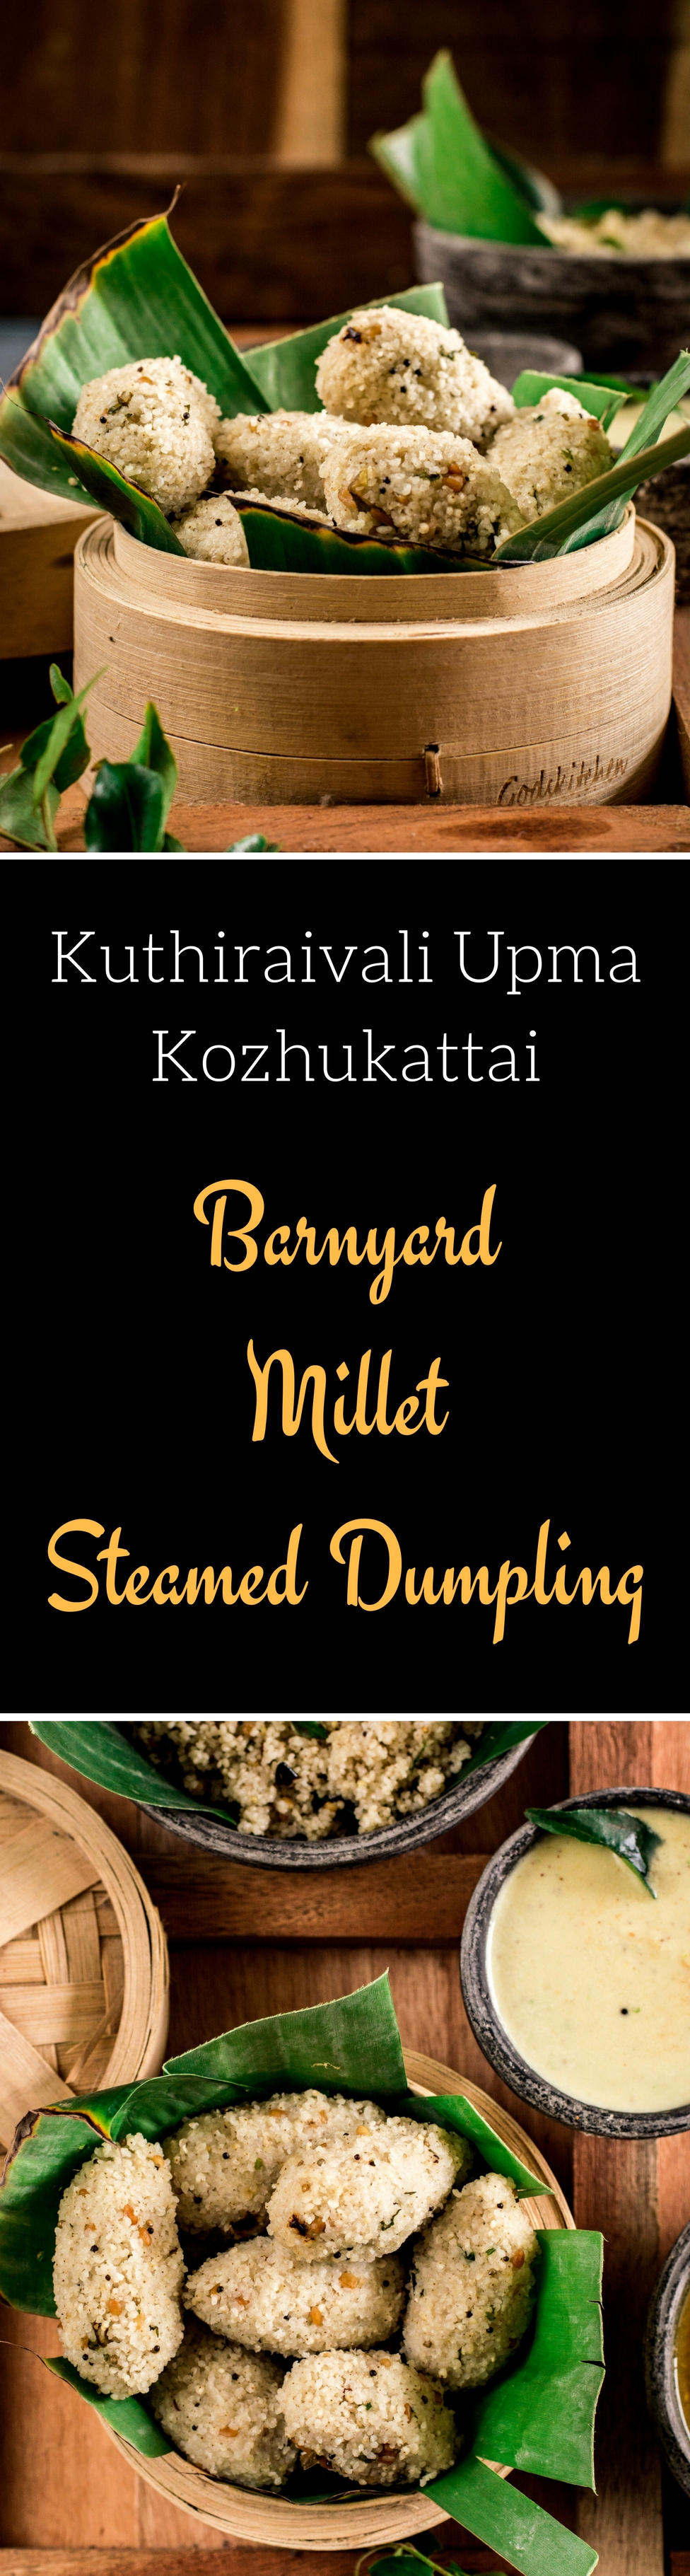 Barnyard Millet Steamed Dumplings